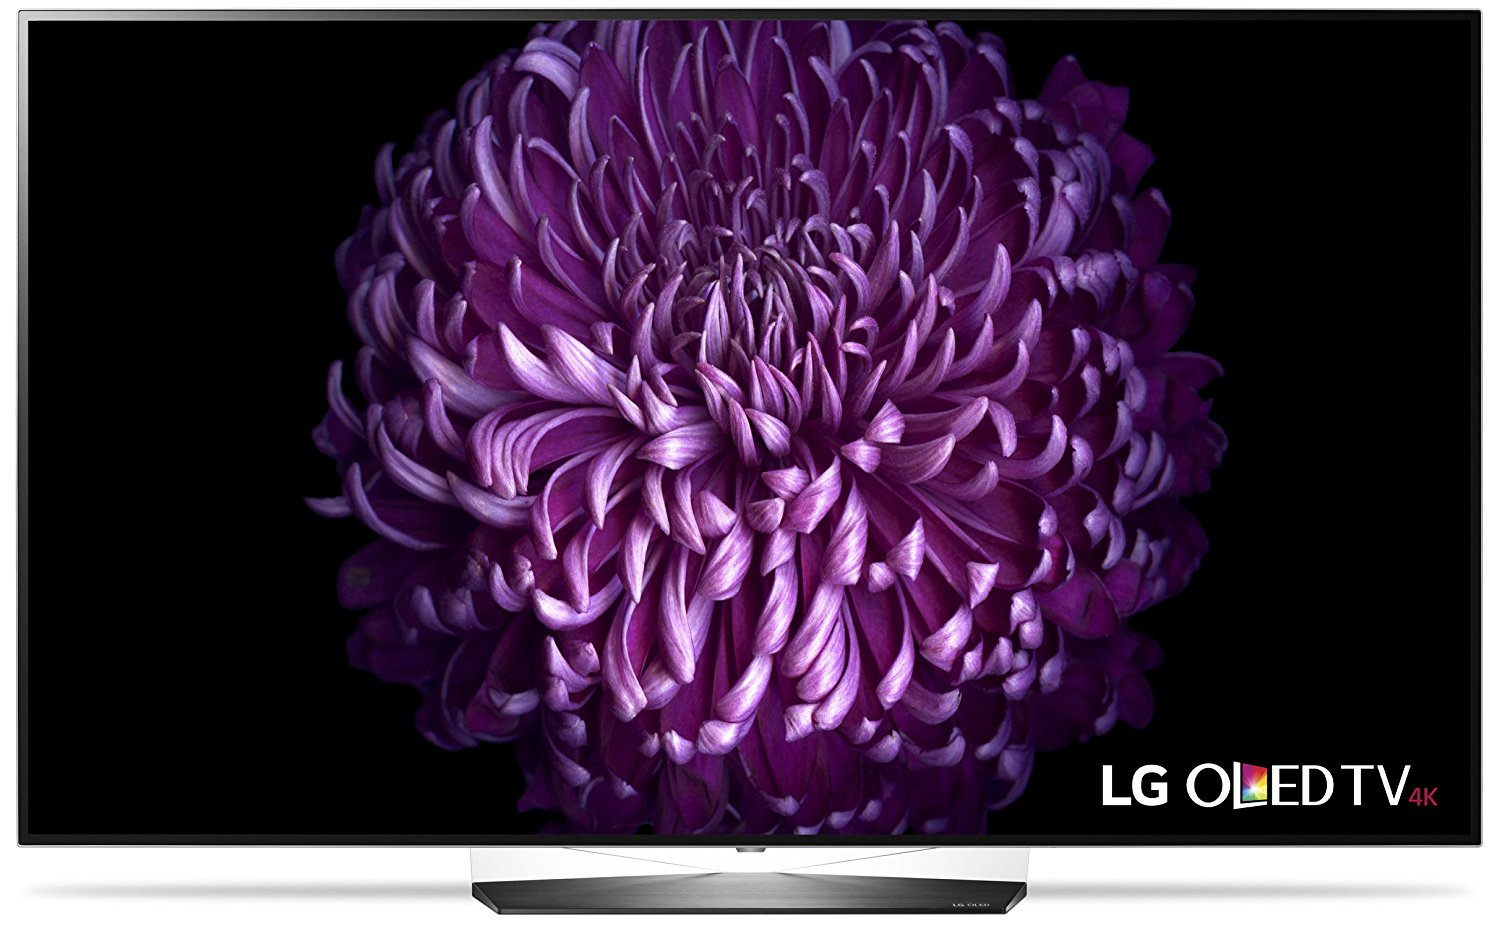 LG B7A OLED TV (55-inch) product image